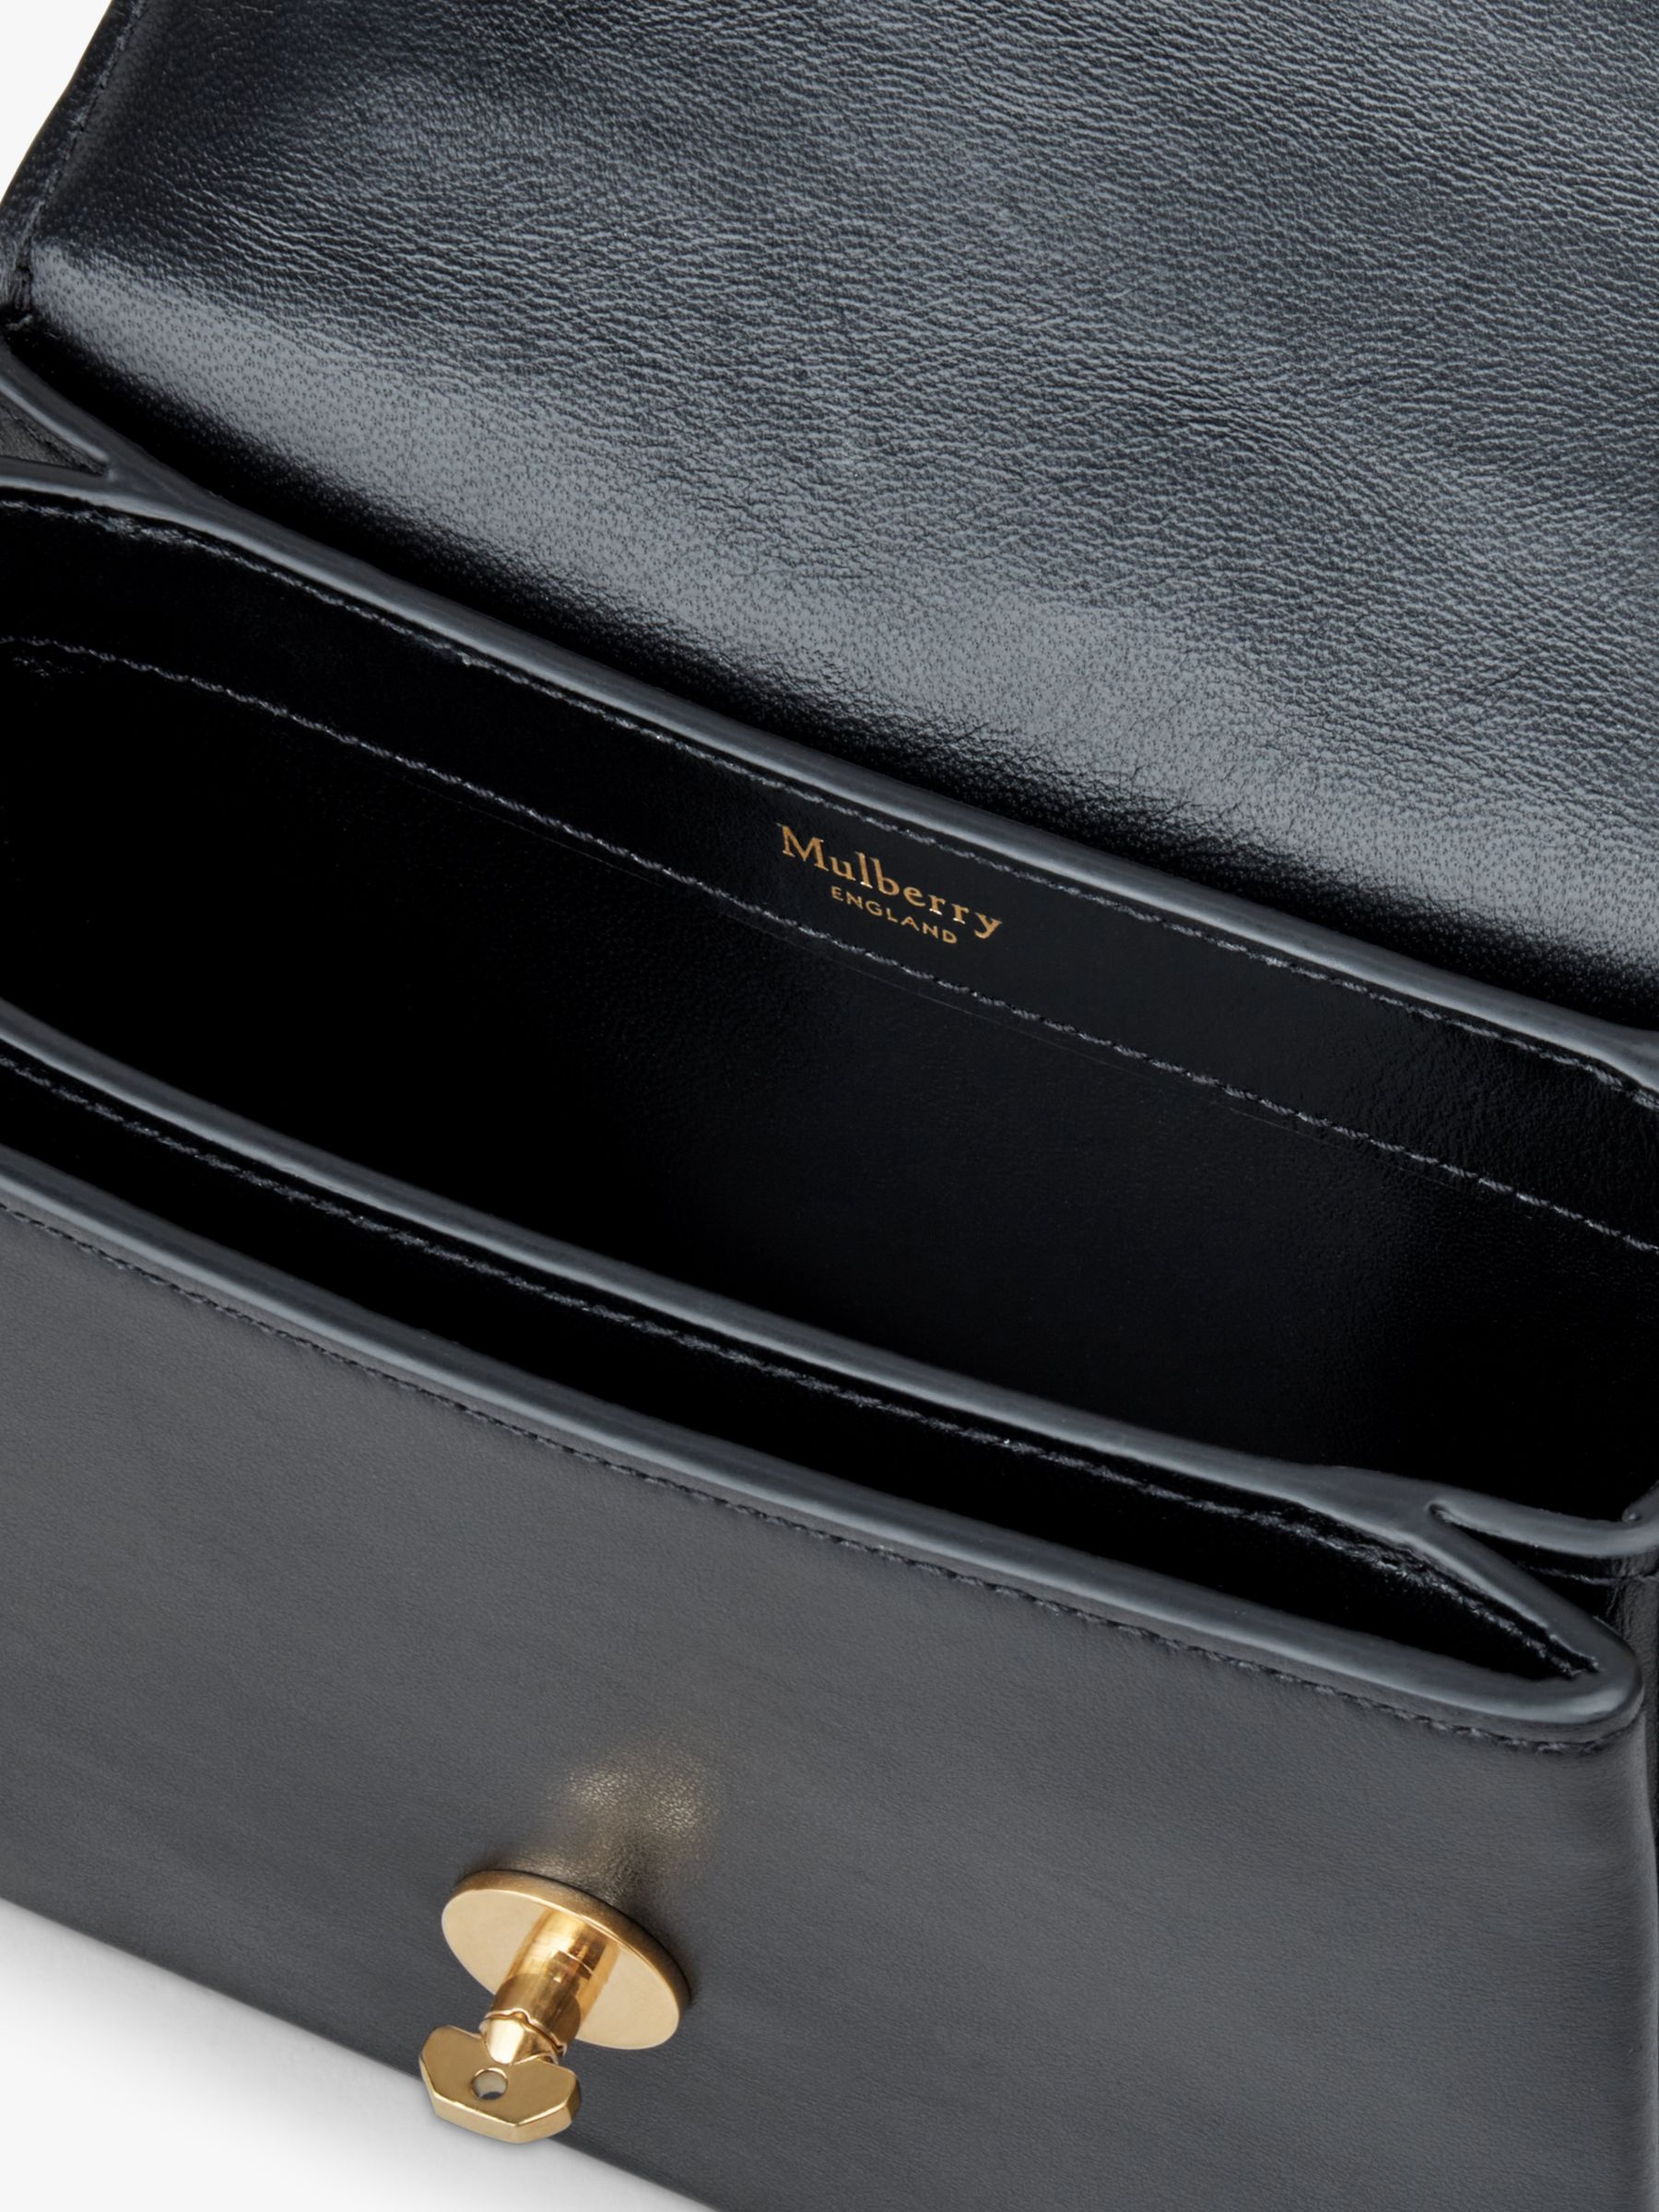 Mulberry Small Lana Top Handle Bag, Black at John Lewis & Partners